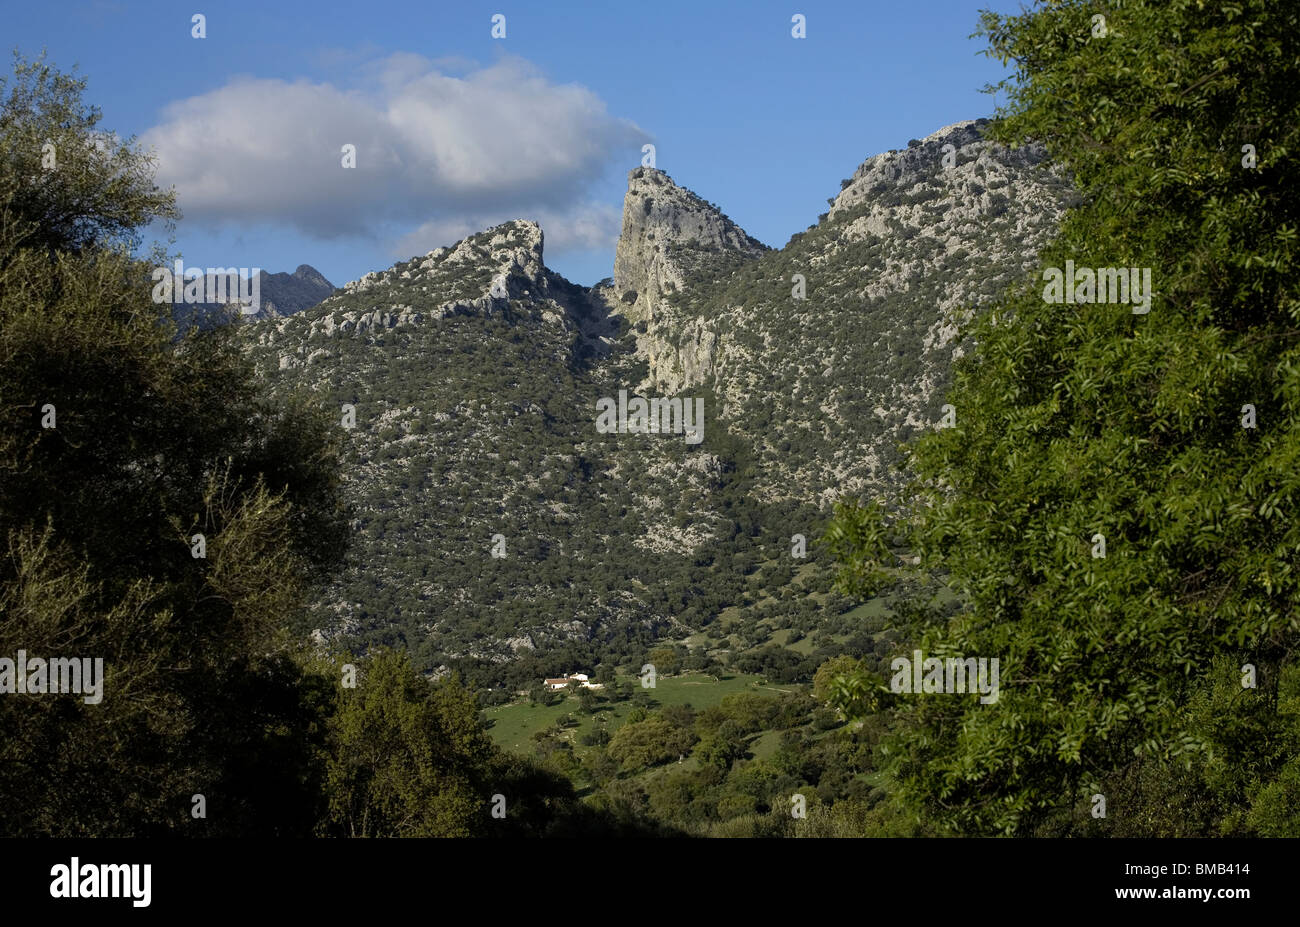 The Salto del Cabrero mountain in Benaocaz in the Sierra de Grazalema Natural Park in Cadiz province, Spain. Stock Photo